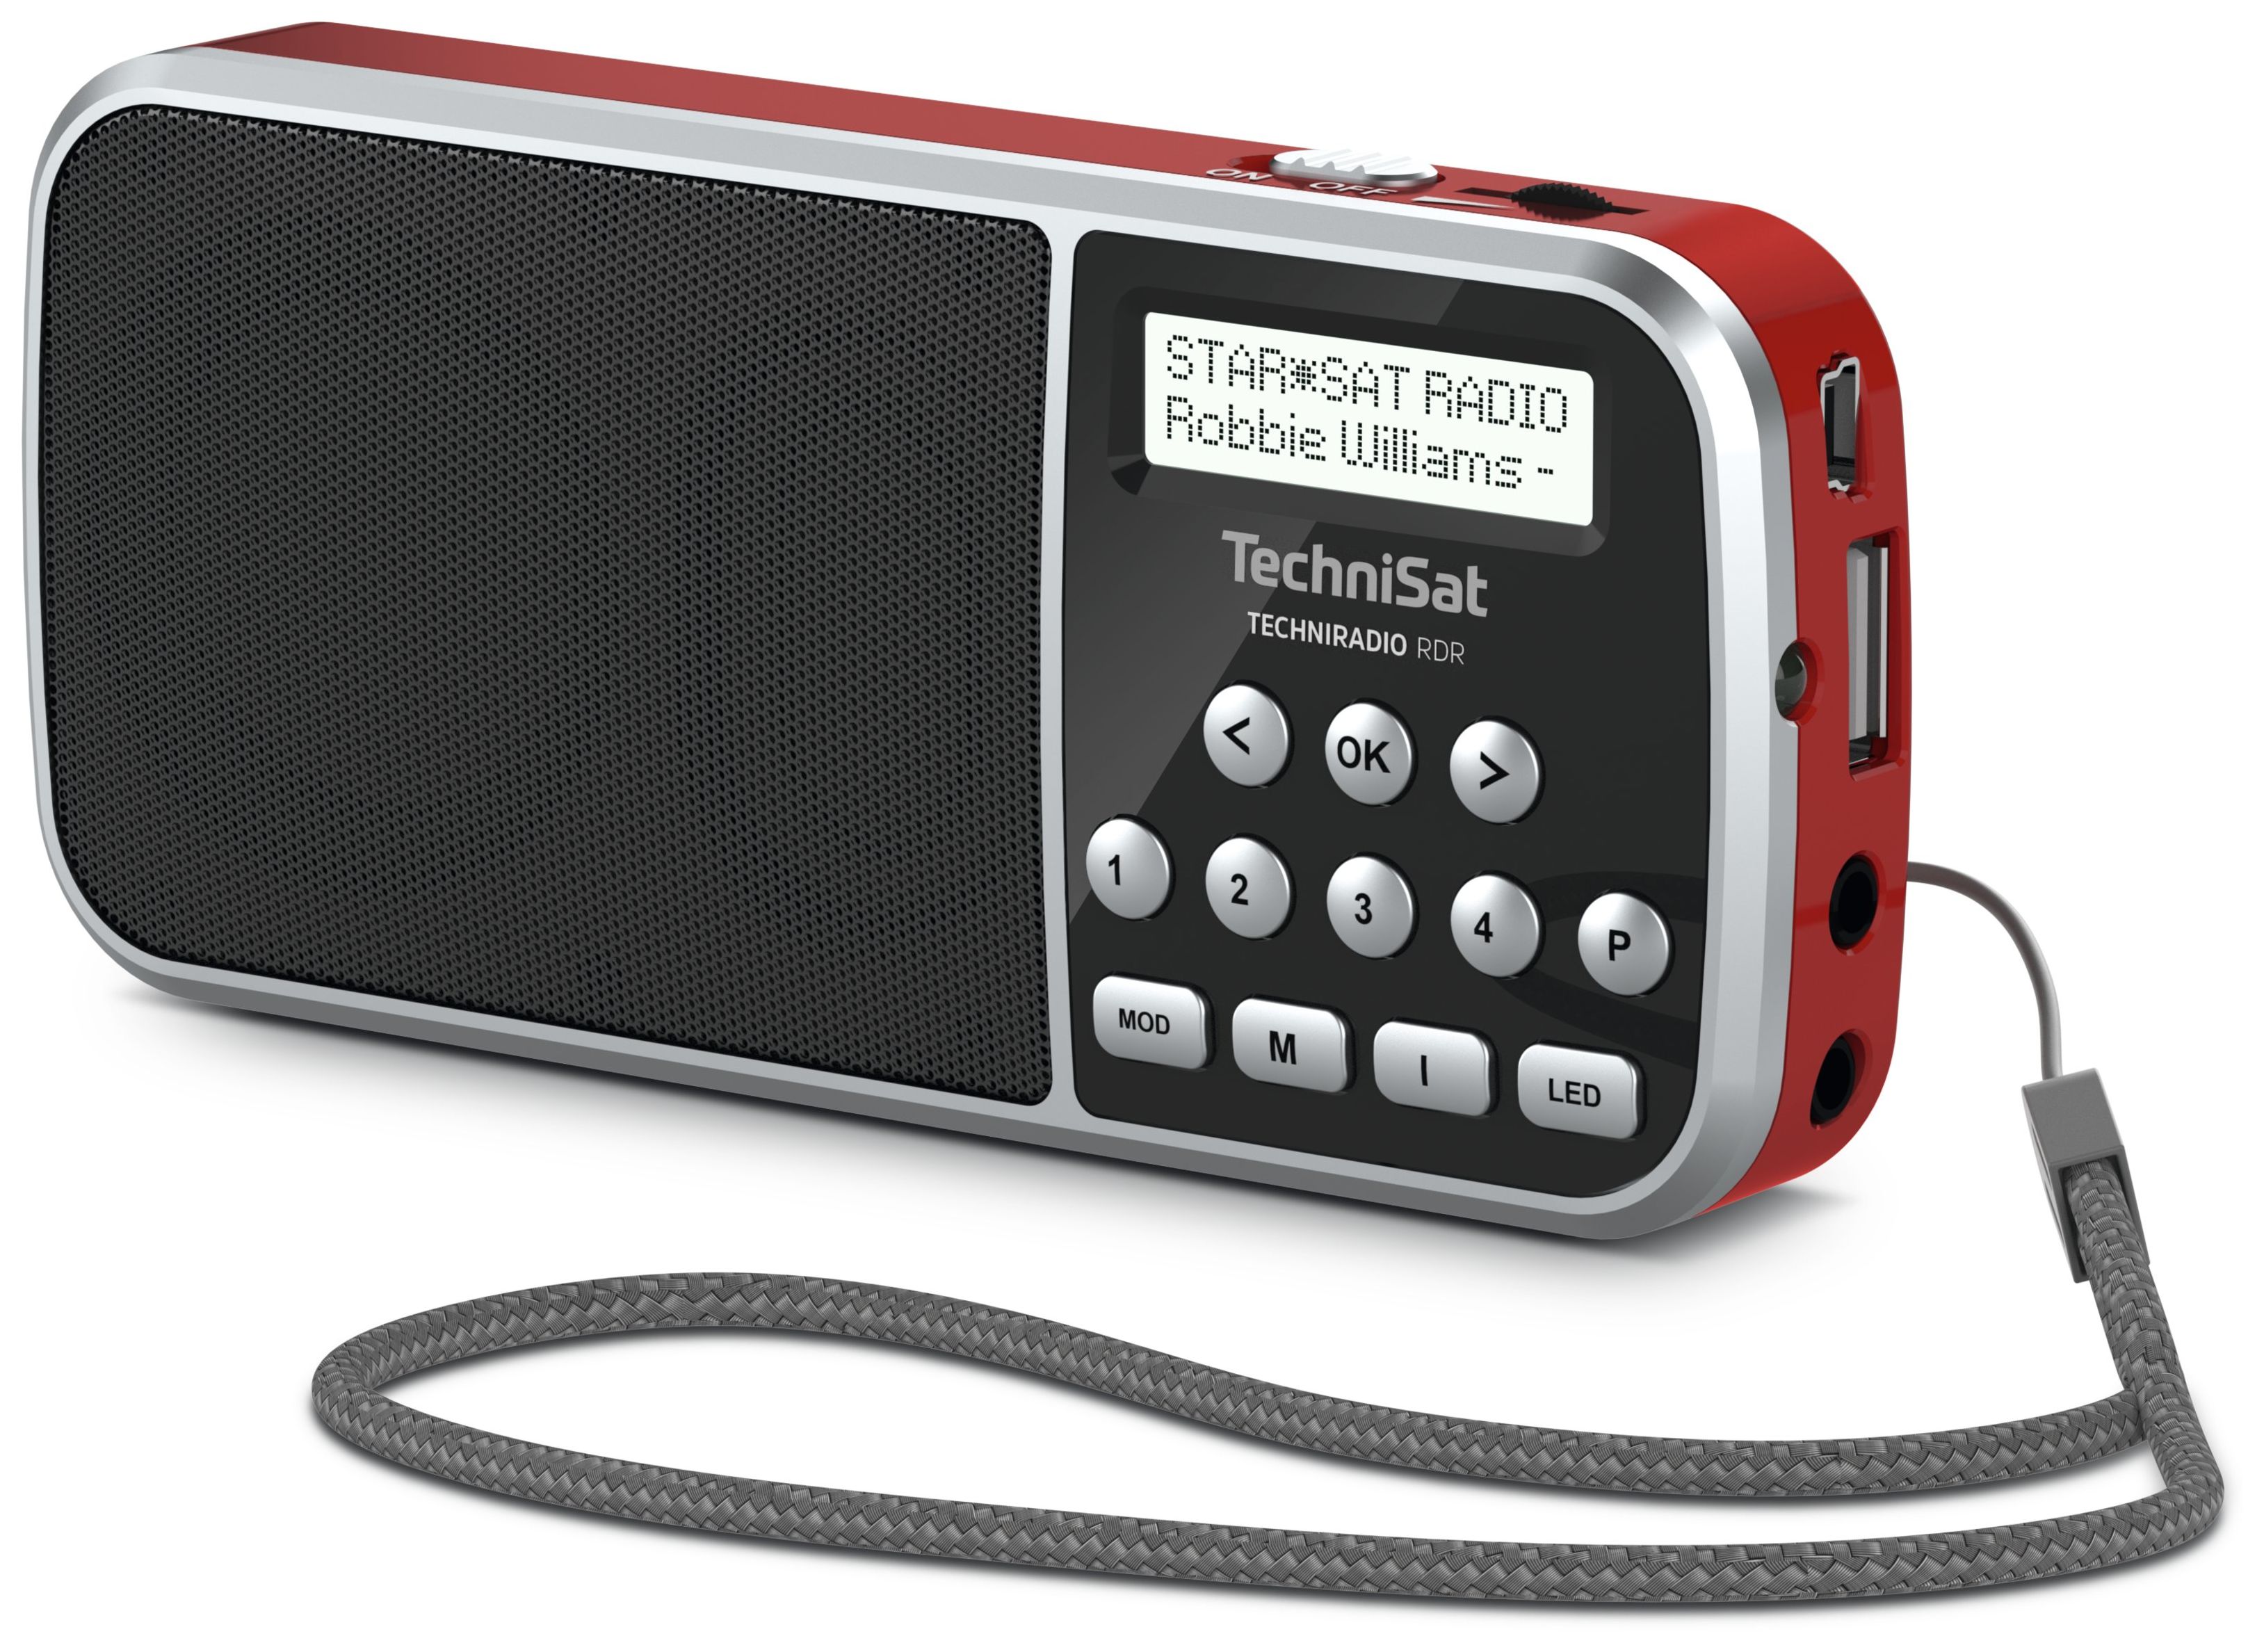 TechniSat TechniRadio RDR DAB+, FM Tragbar Radio (Rot) von expert  Technomarkt